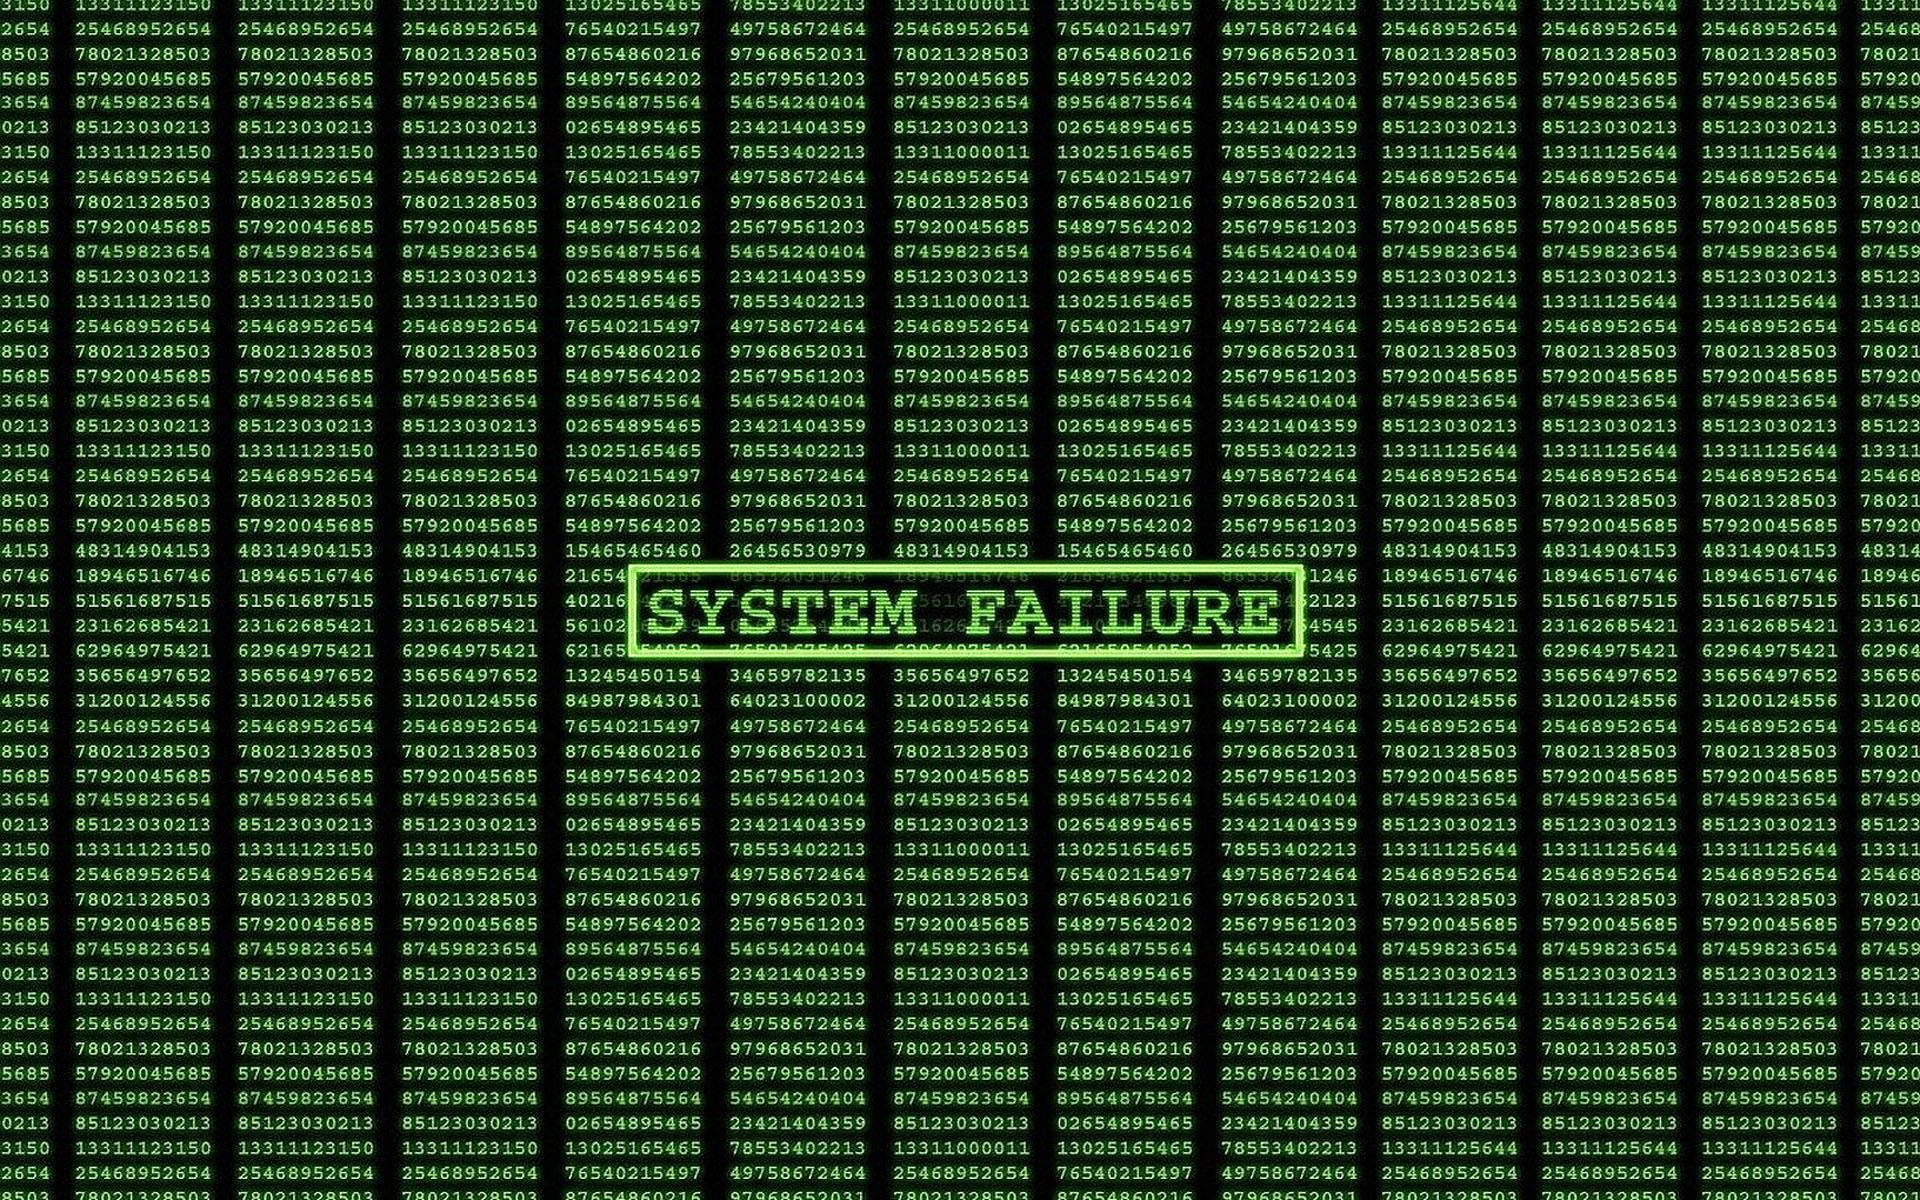 System Failure in the Matrix Wallpaper